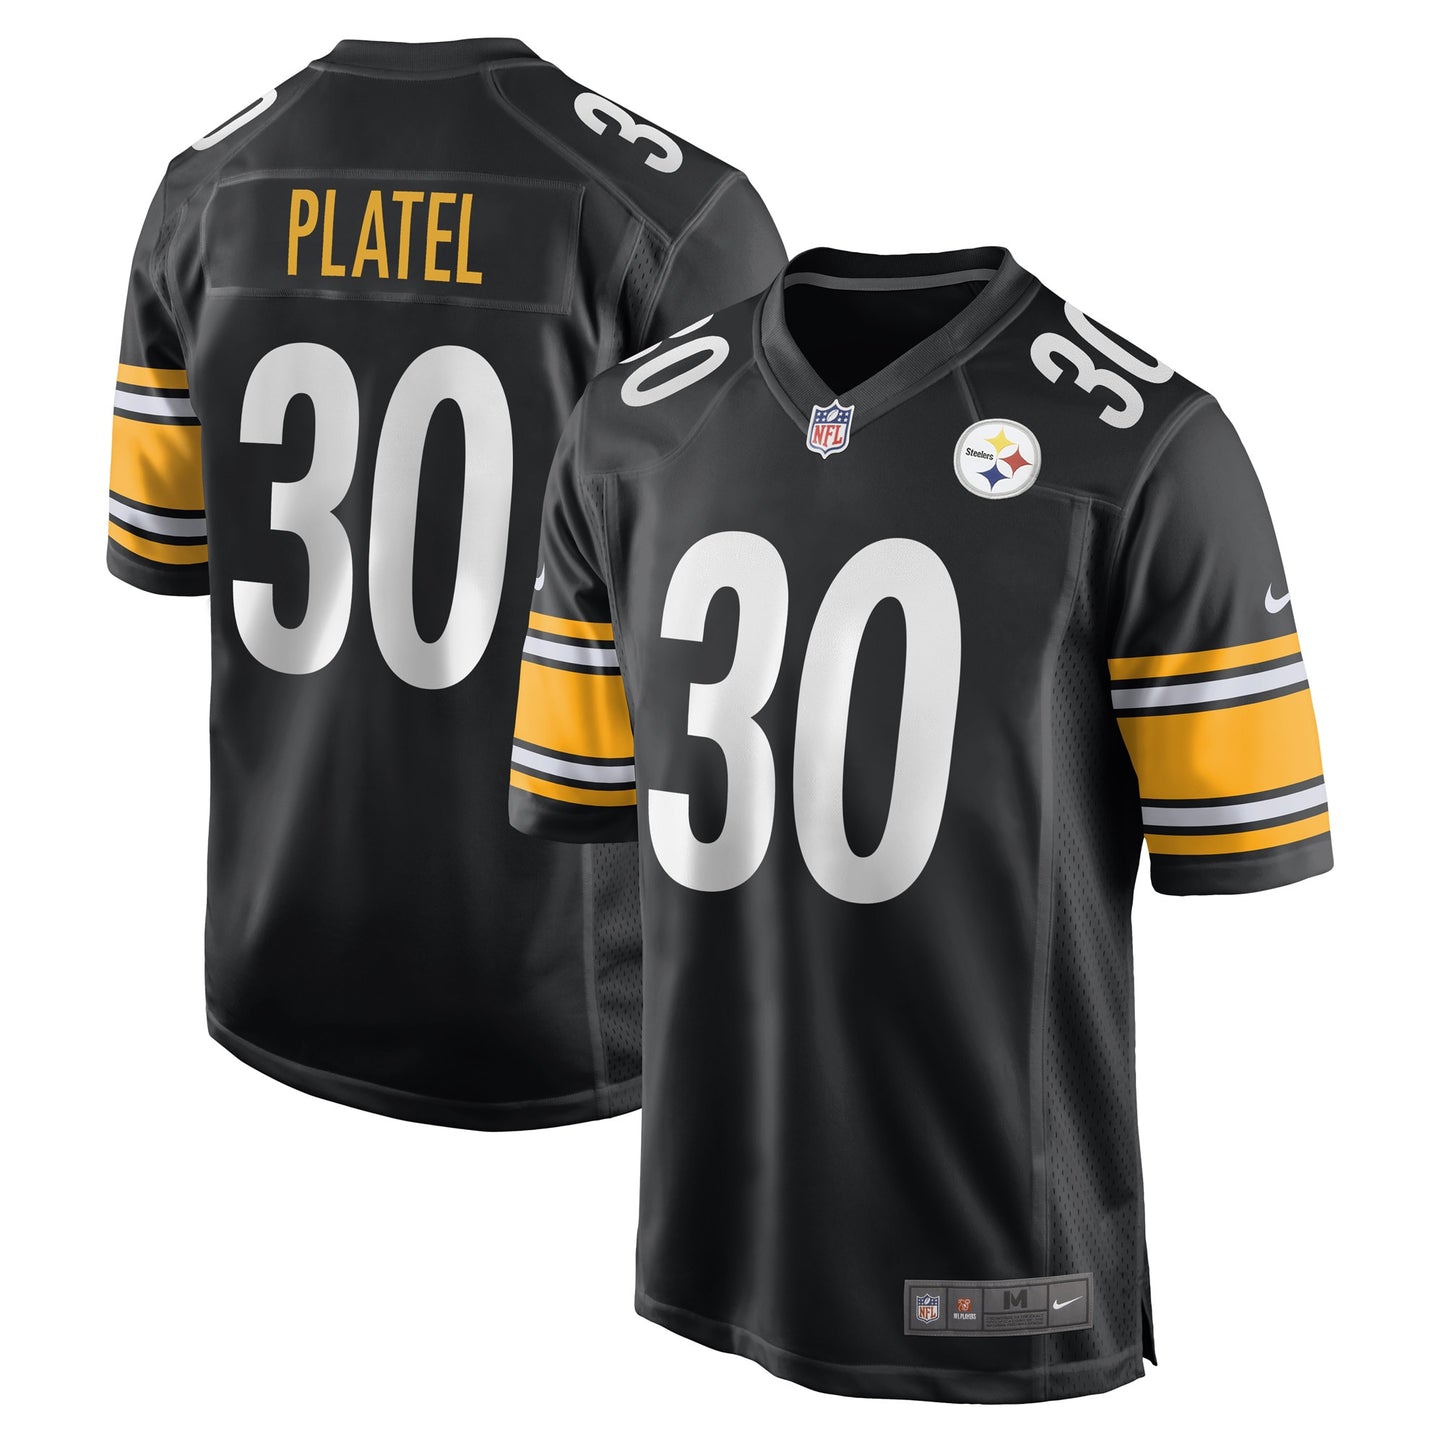 Carlins Platel Pittsburgh Steelers Nike Game Player Jersey - Black